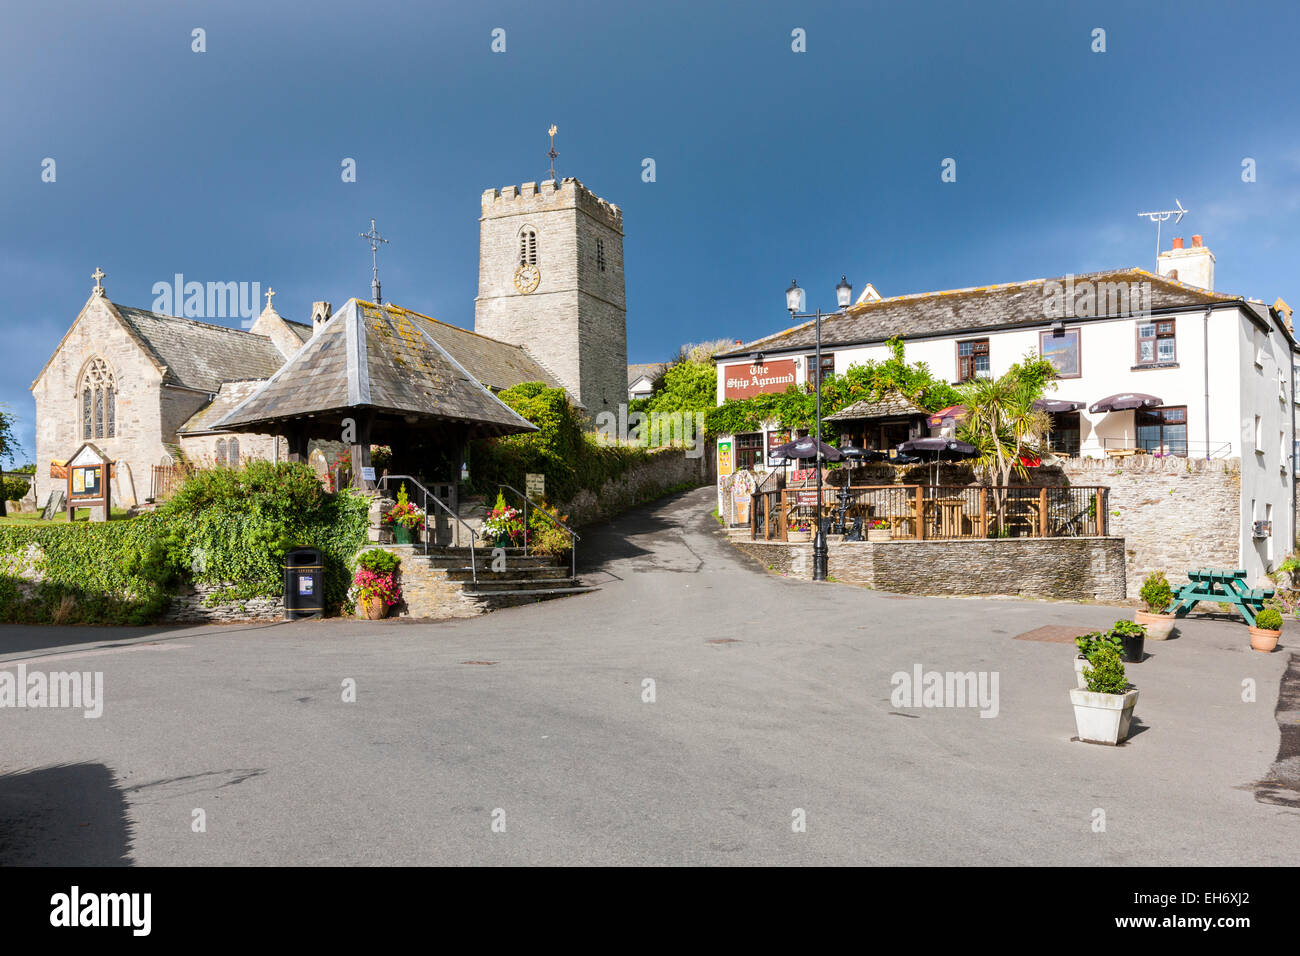 Mortehoe village, St Mary’s church and The Ship Aground pub near Woolacombe, North Devon, England, United Kingdom. Stock Photo